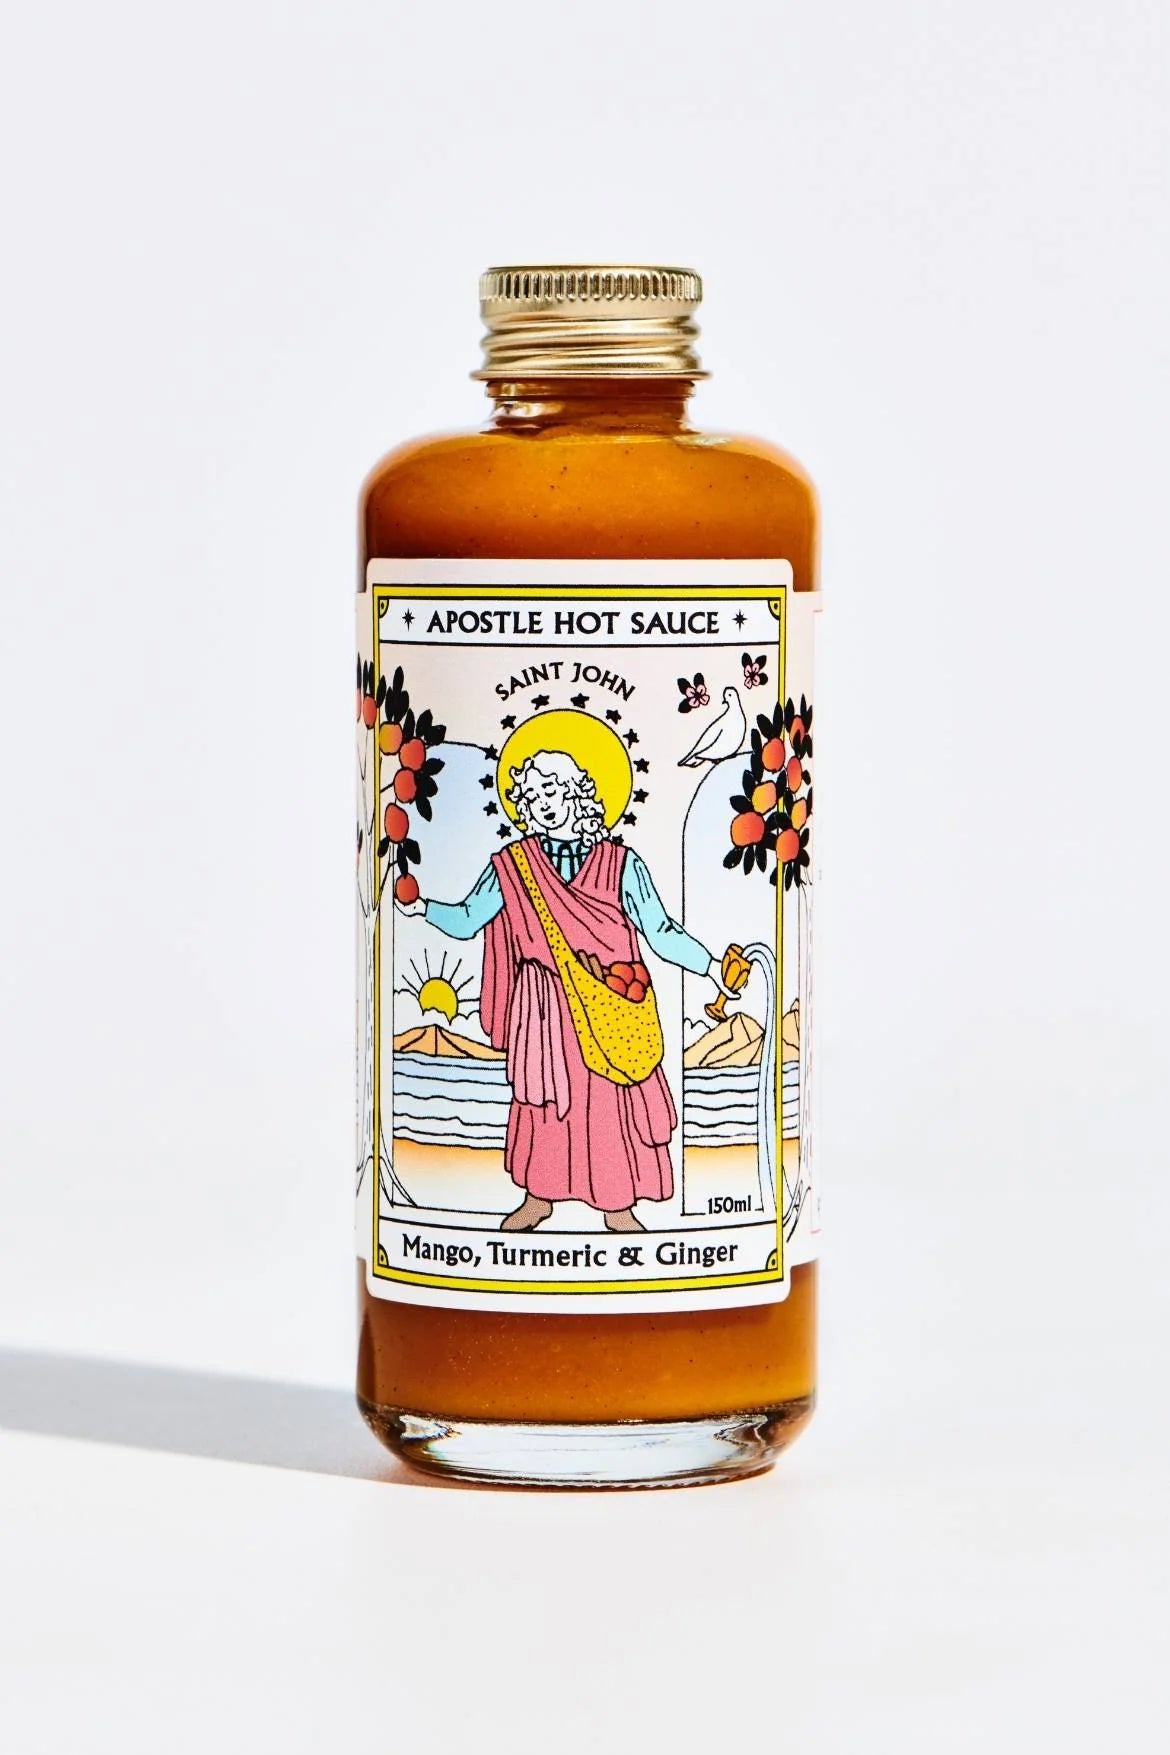 Apostle Hot Sauce - St John - Mango Turmeric & Ginger 150ml